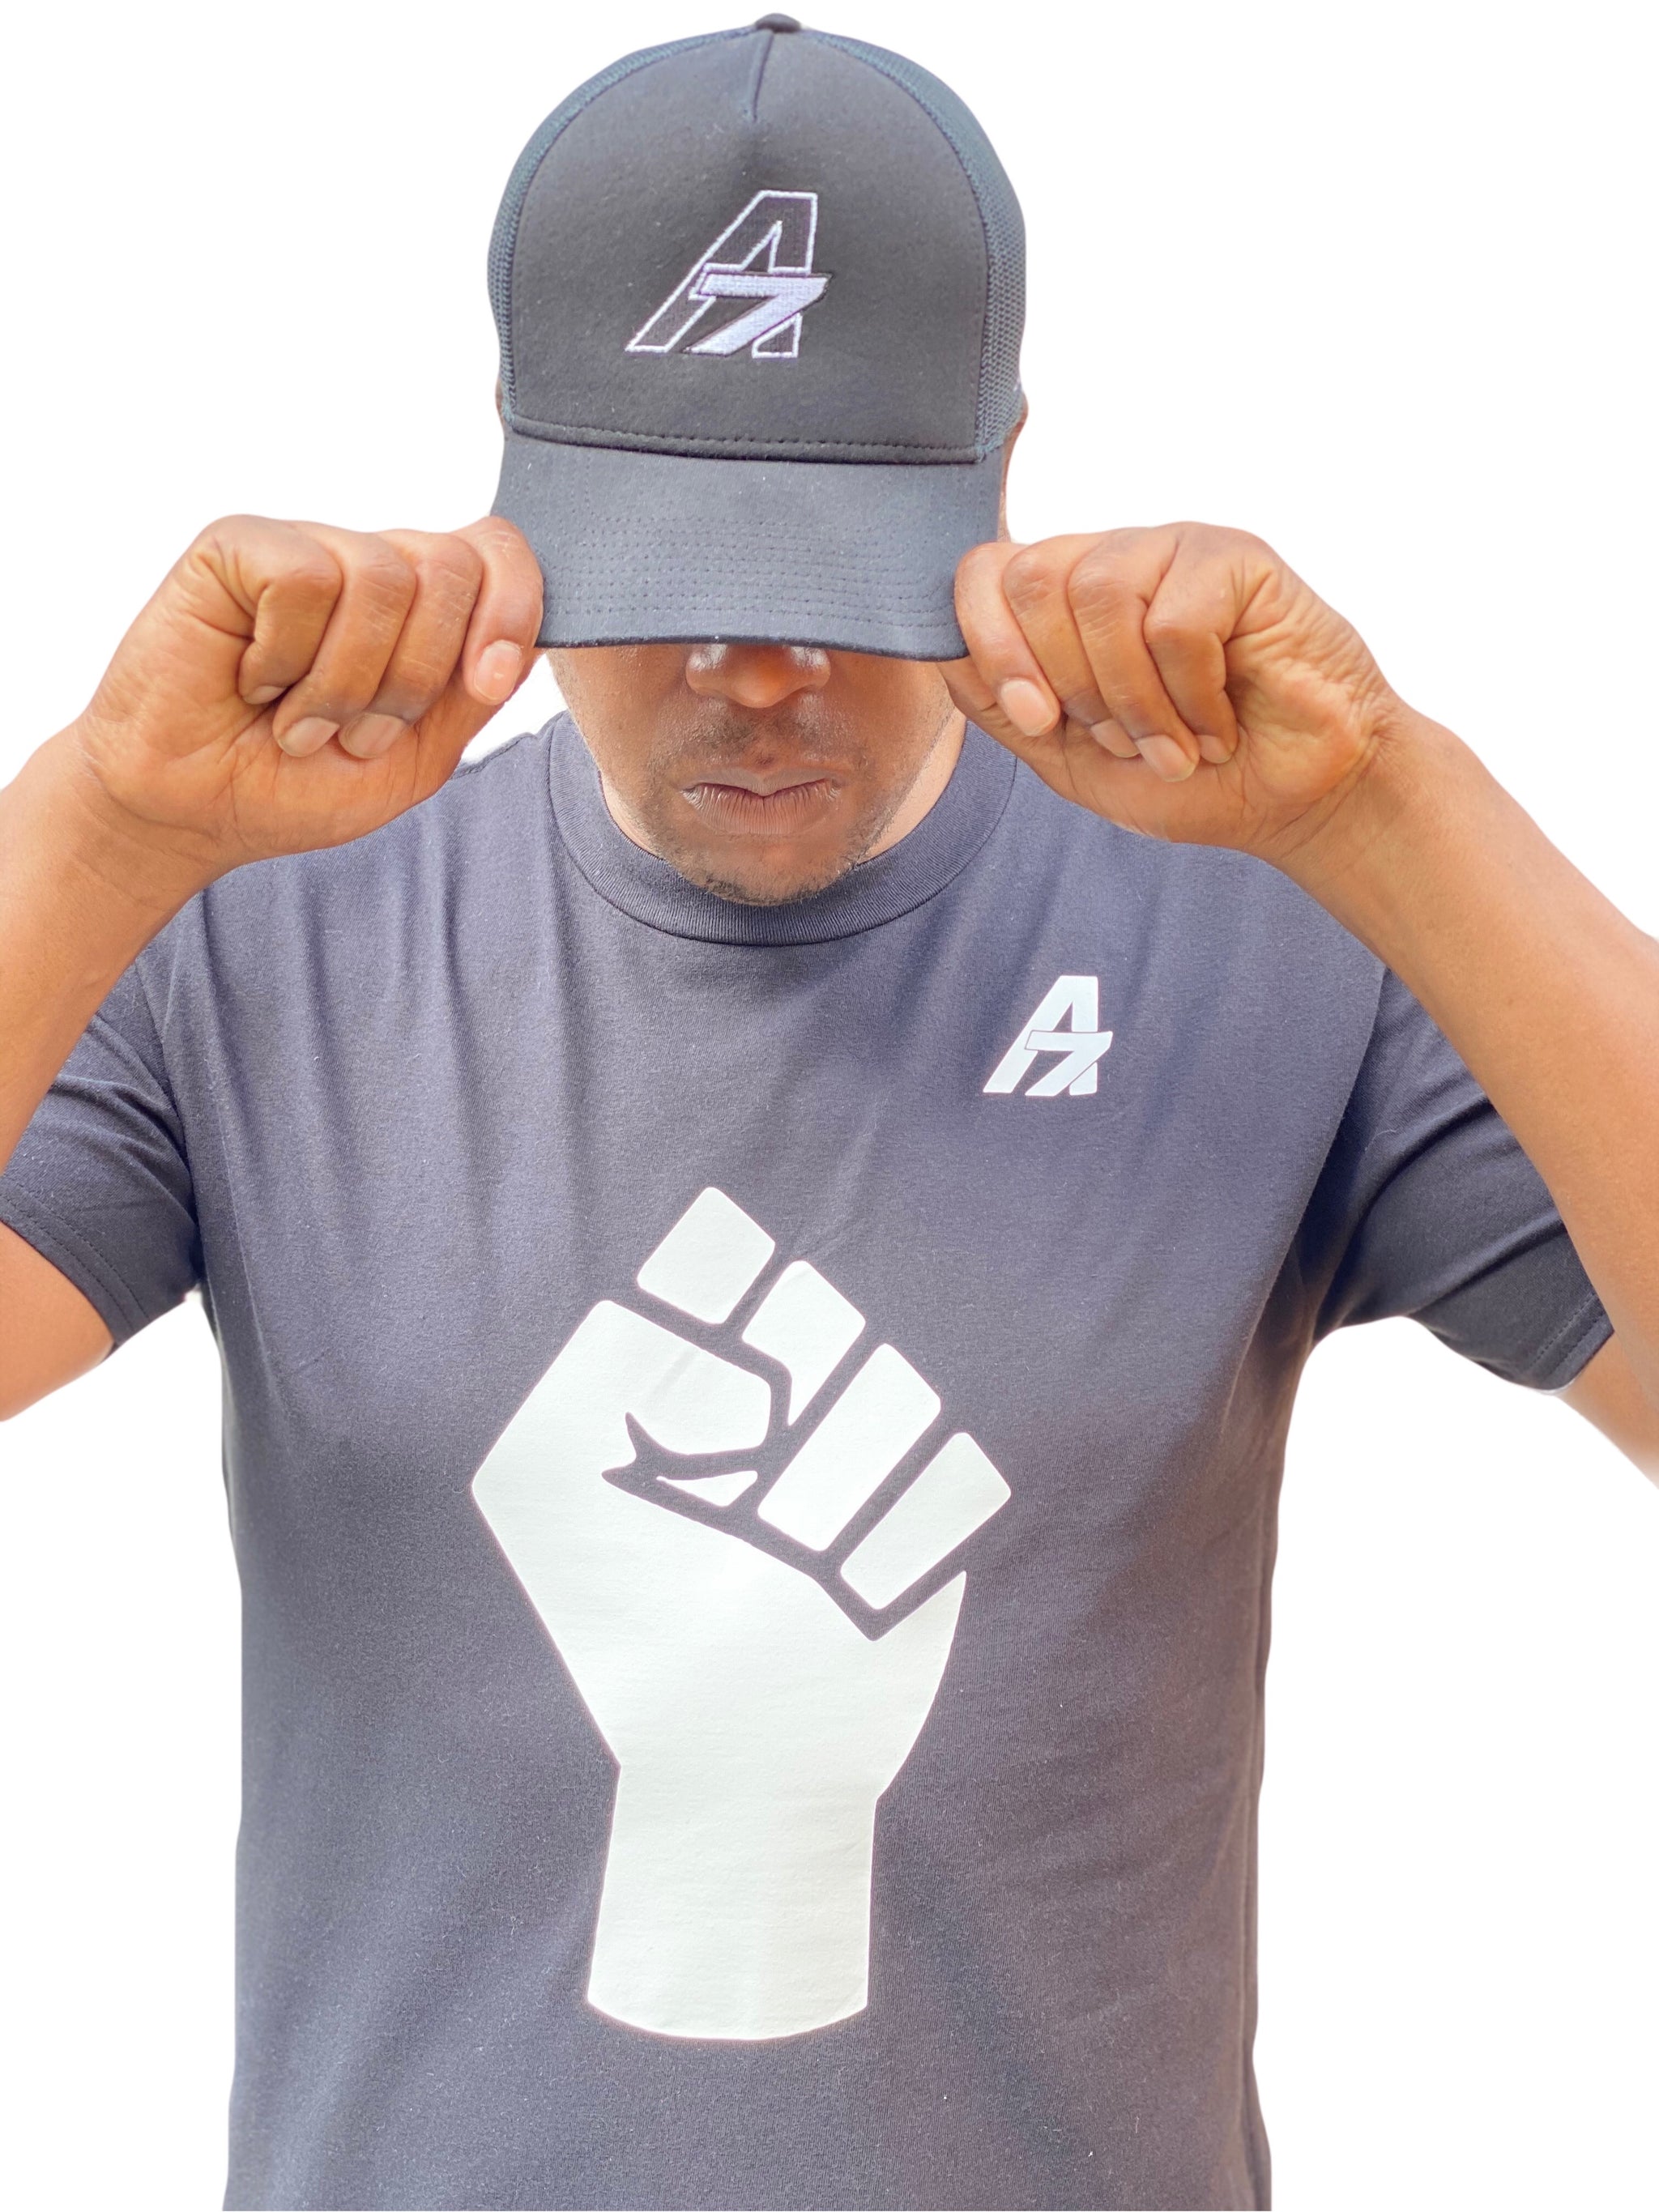 A7Asher "Black Lives Matter Fist " Black T-Shirt, White A7 Logo